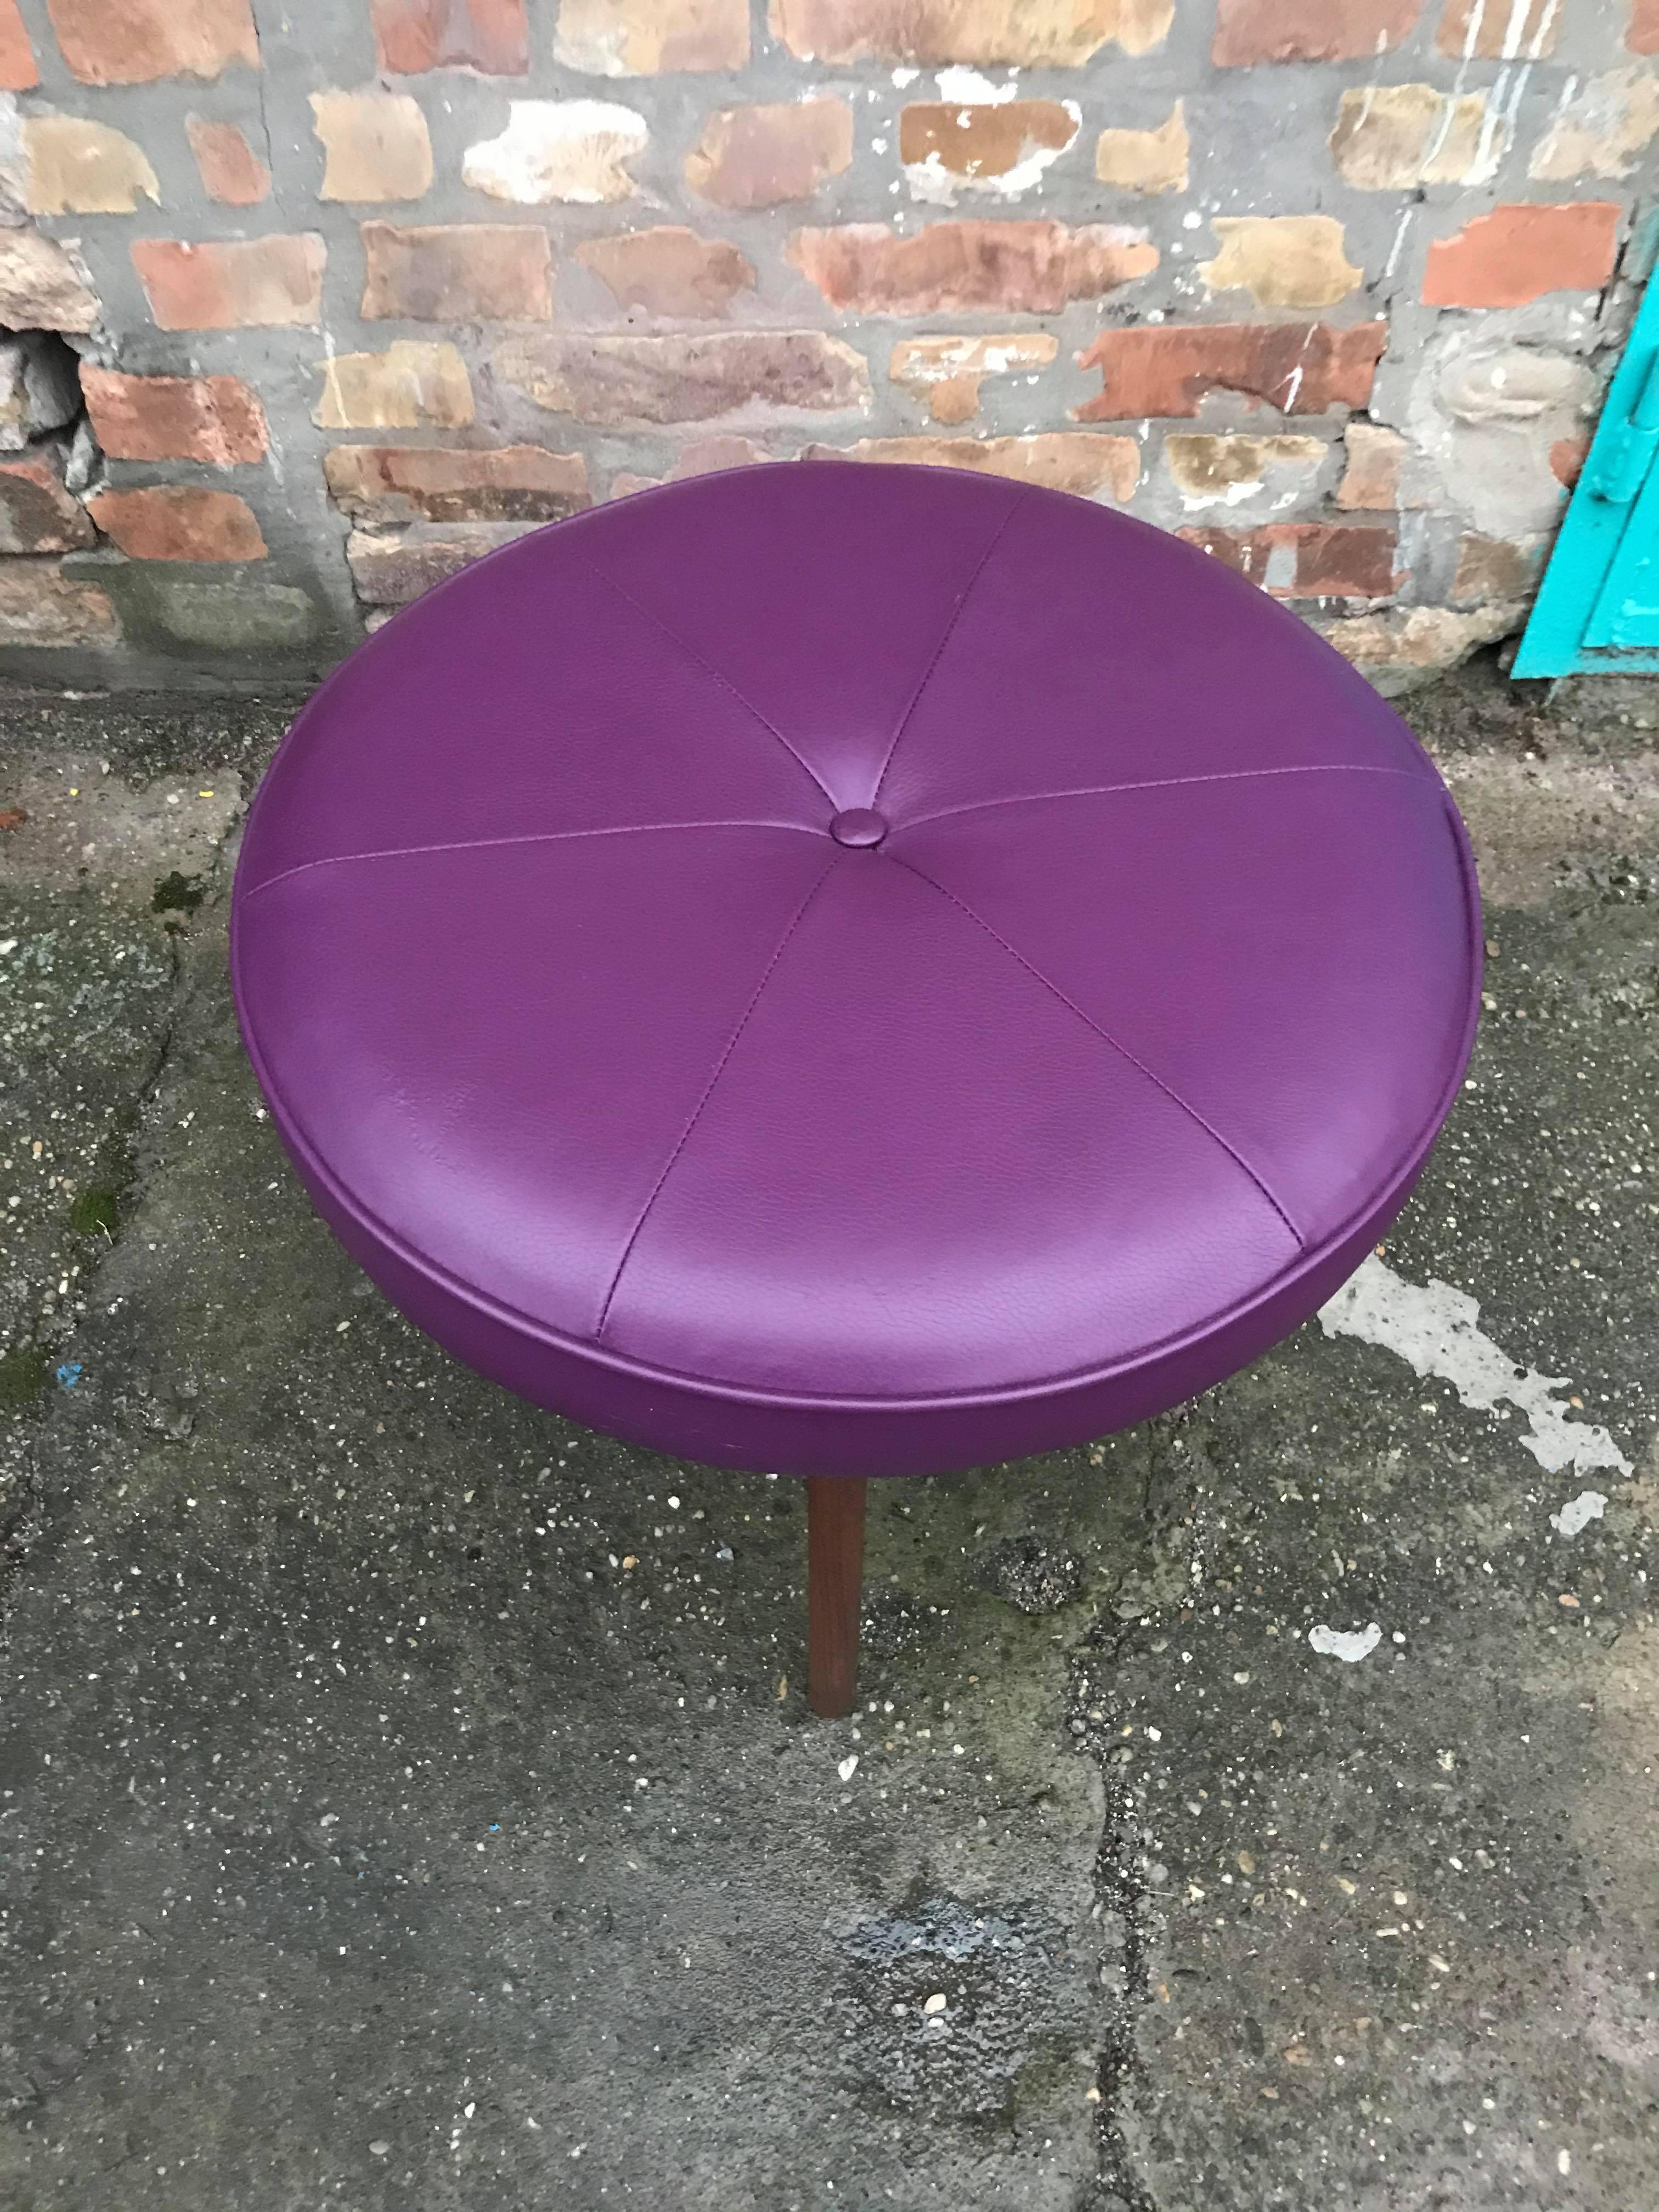 A stunning 1960s G Plan teak stool design by Danish designer Kofod Larsen for G Plan.
G Plan Fresco midcentury teak dressing table foot stool vintage retro.
Purple color leather.

 